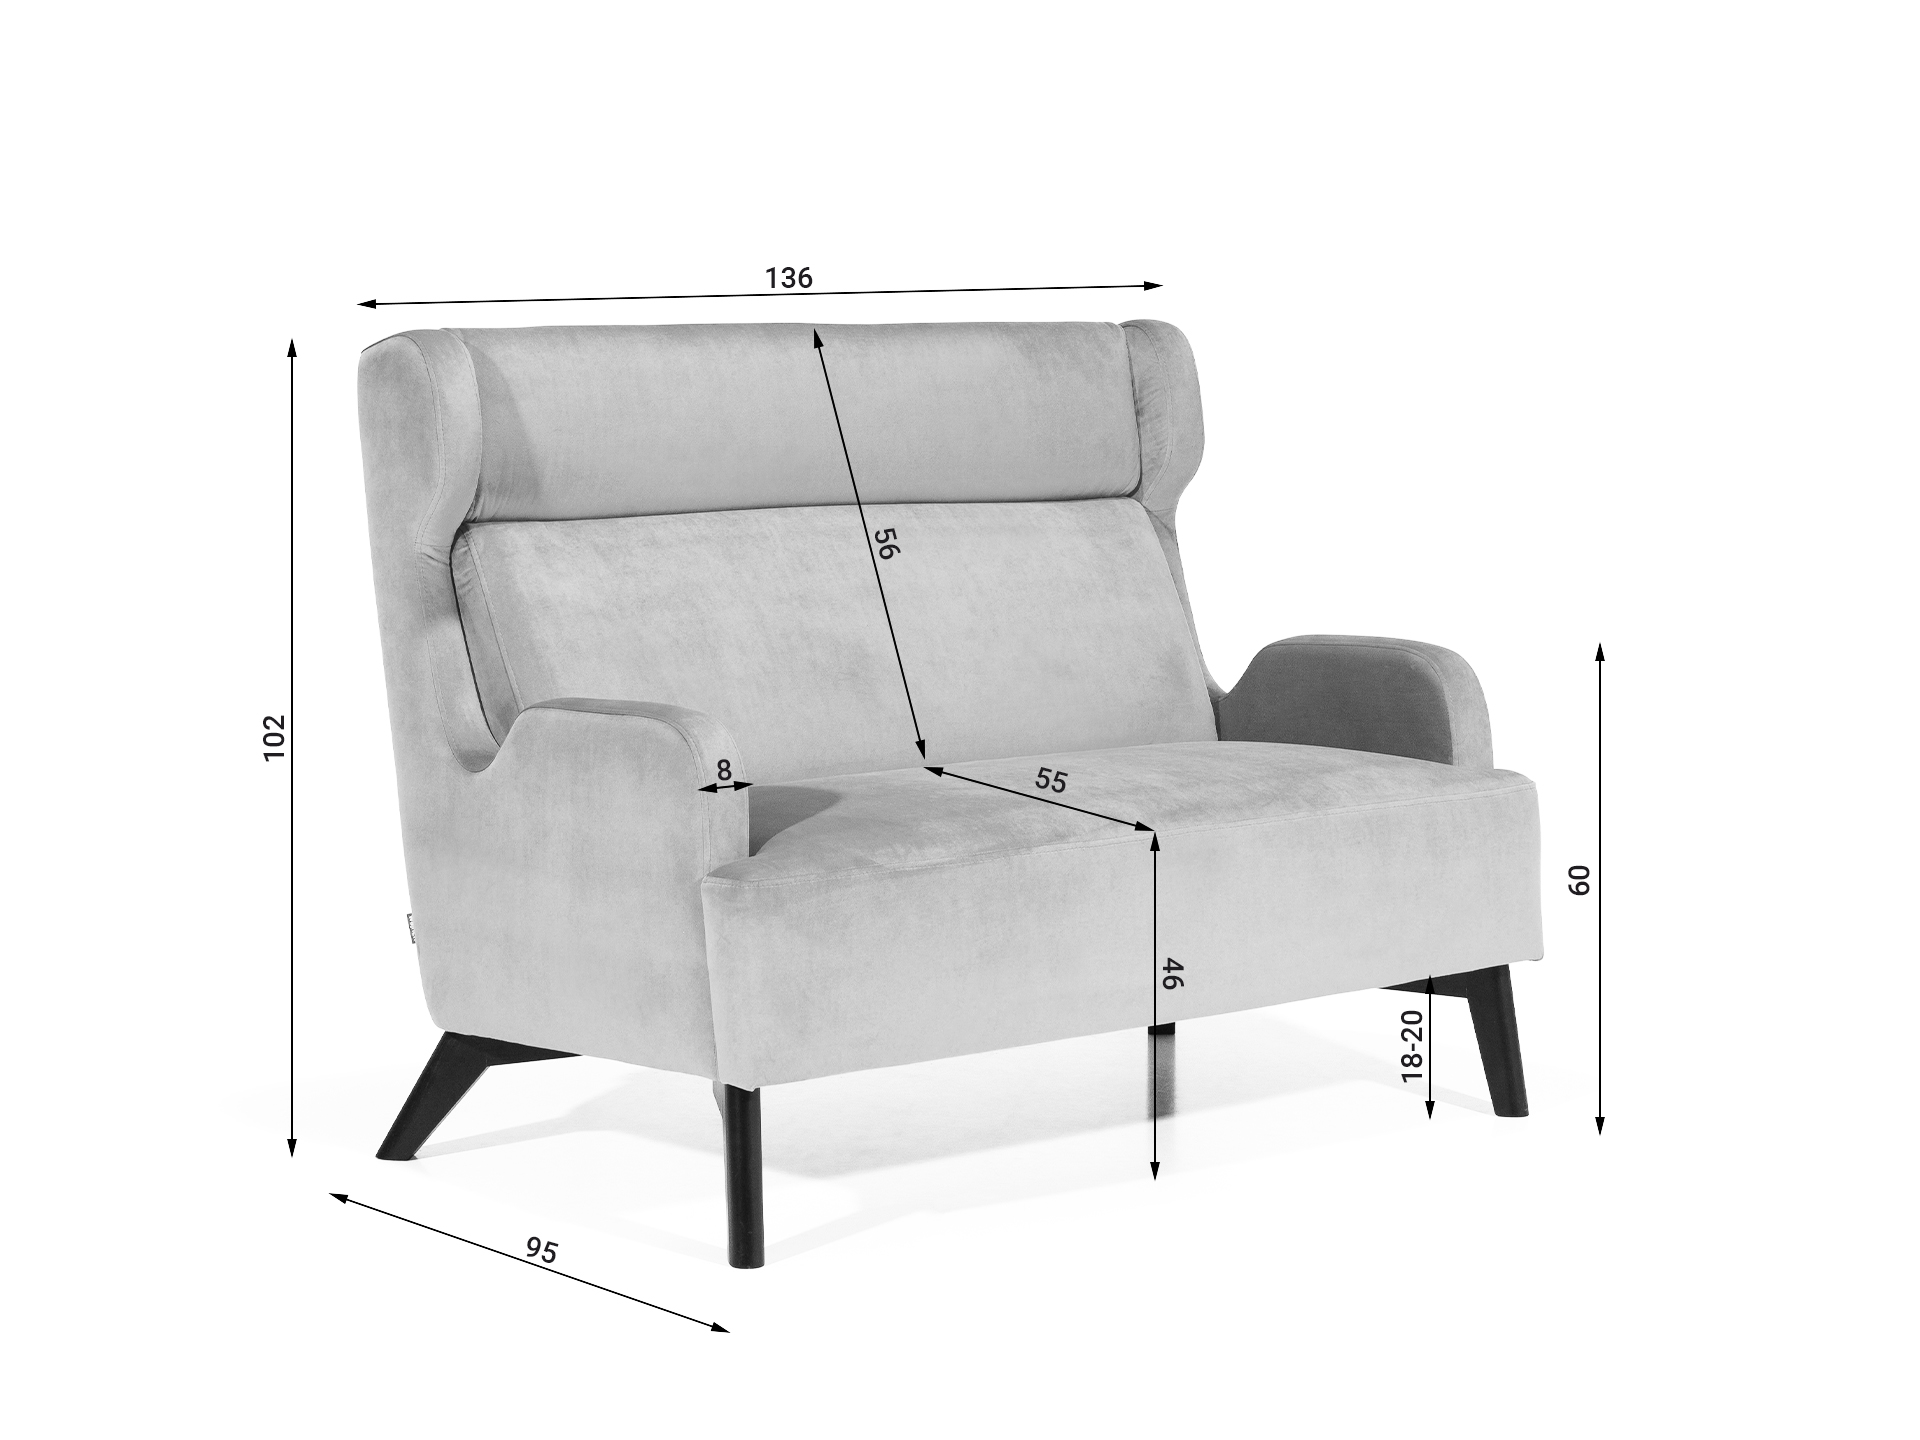 Designerska sofa Wing - wymiary